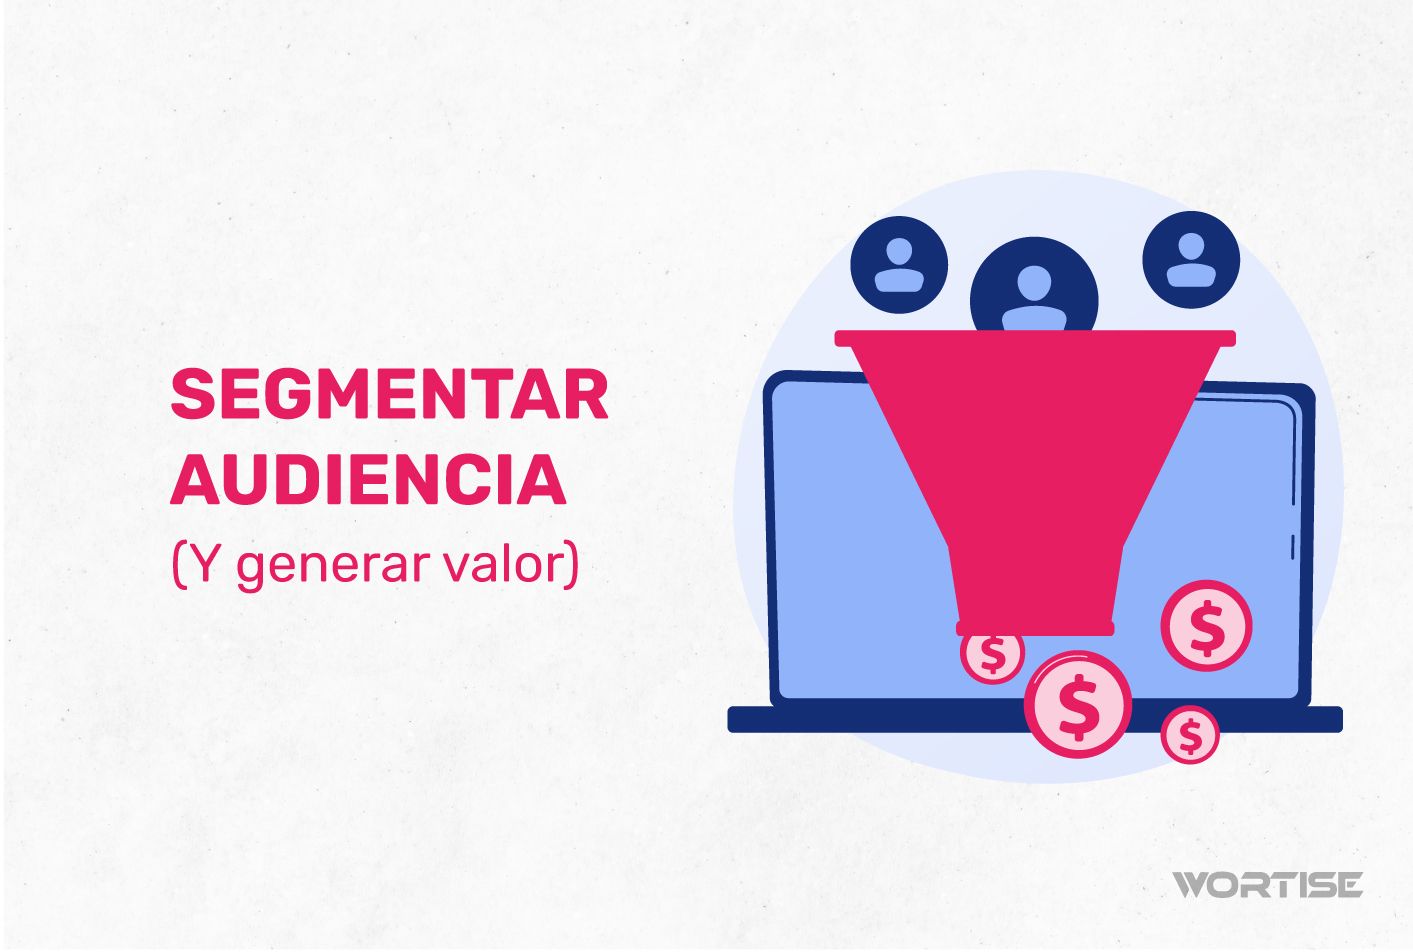 Mobile App User Segmentation: 4 parámetros para segmentar a tu audiencia y generar valor a largo plazo